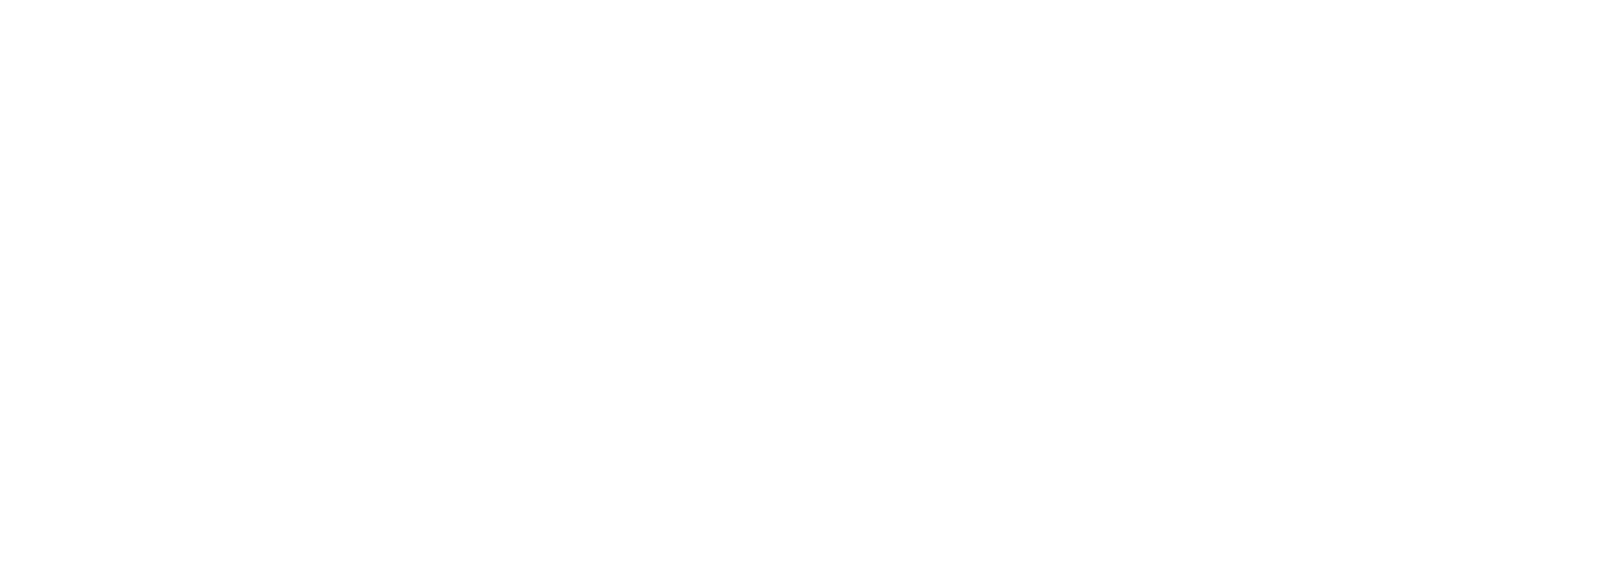 West Midlands Metro logo